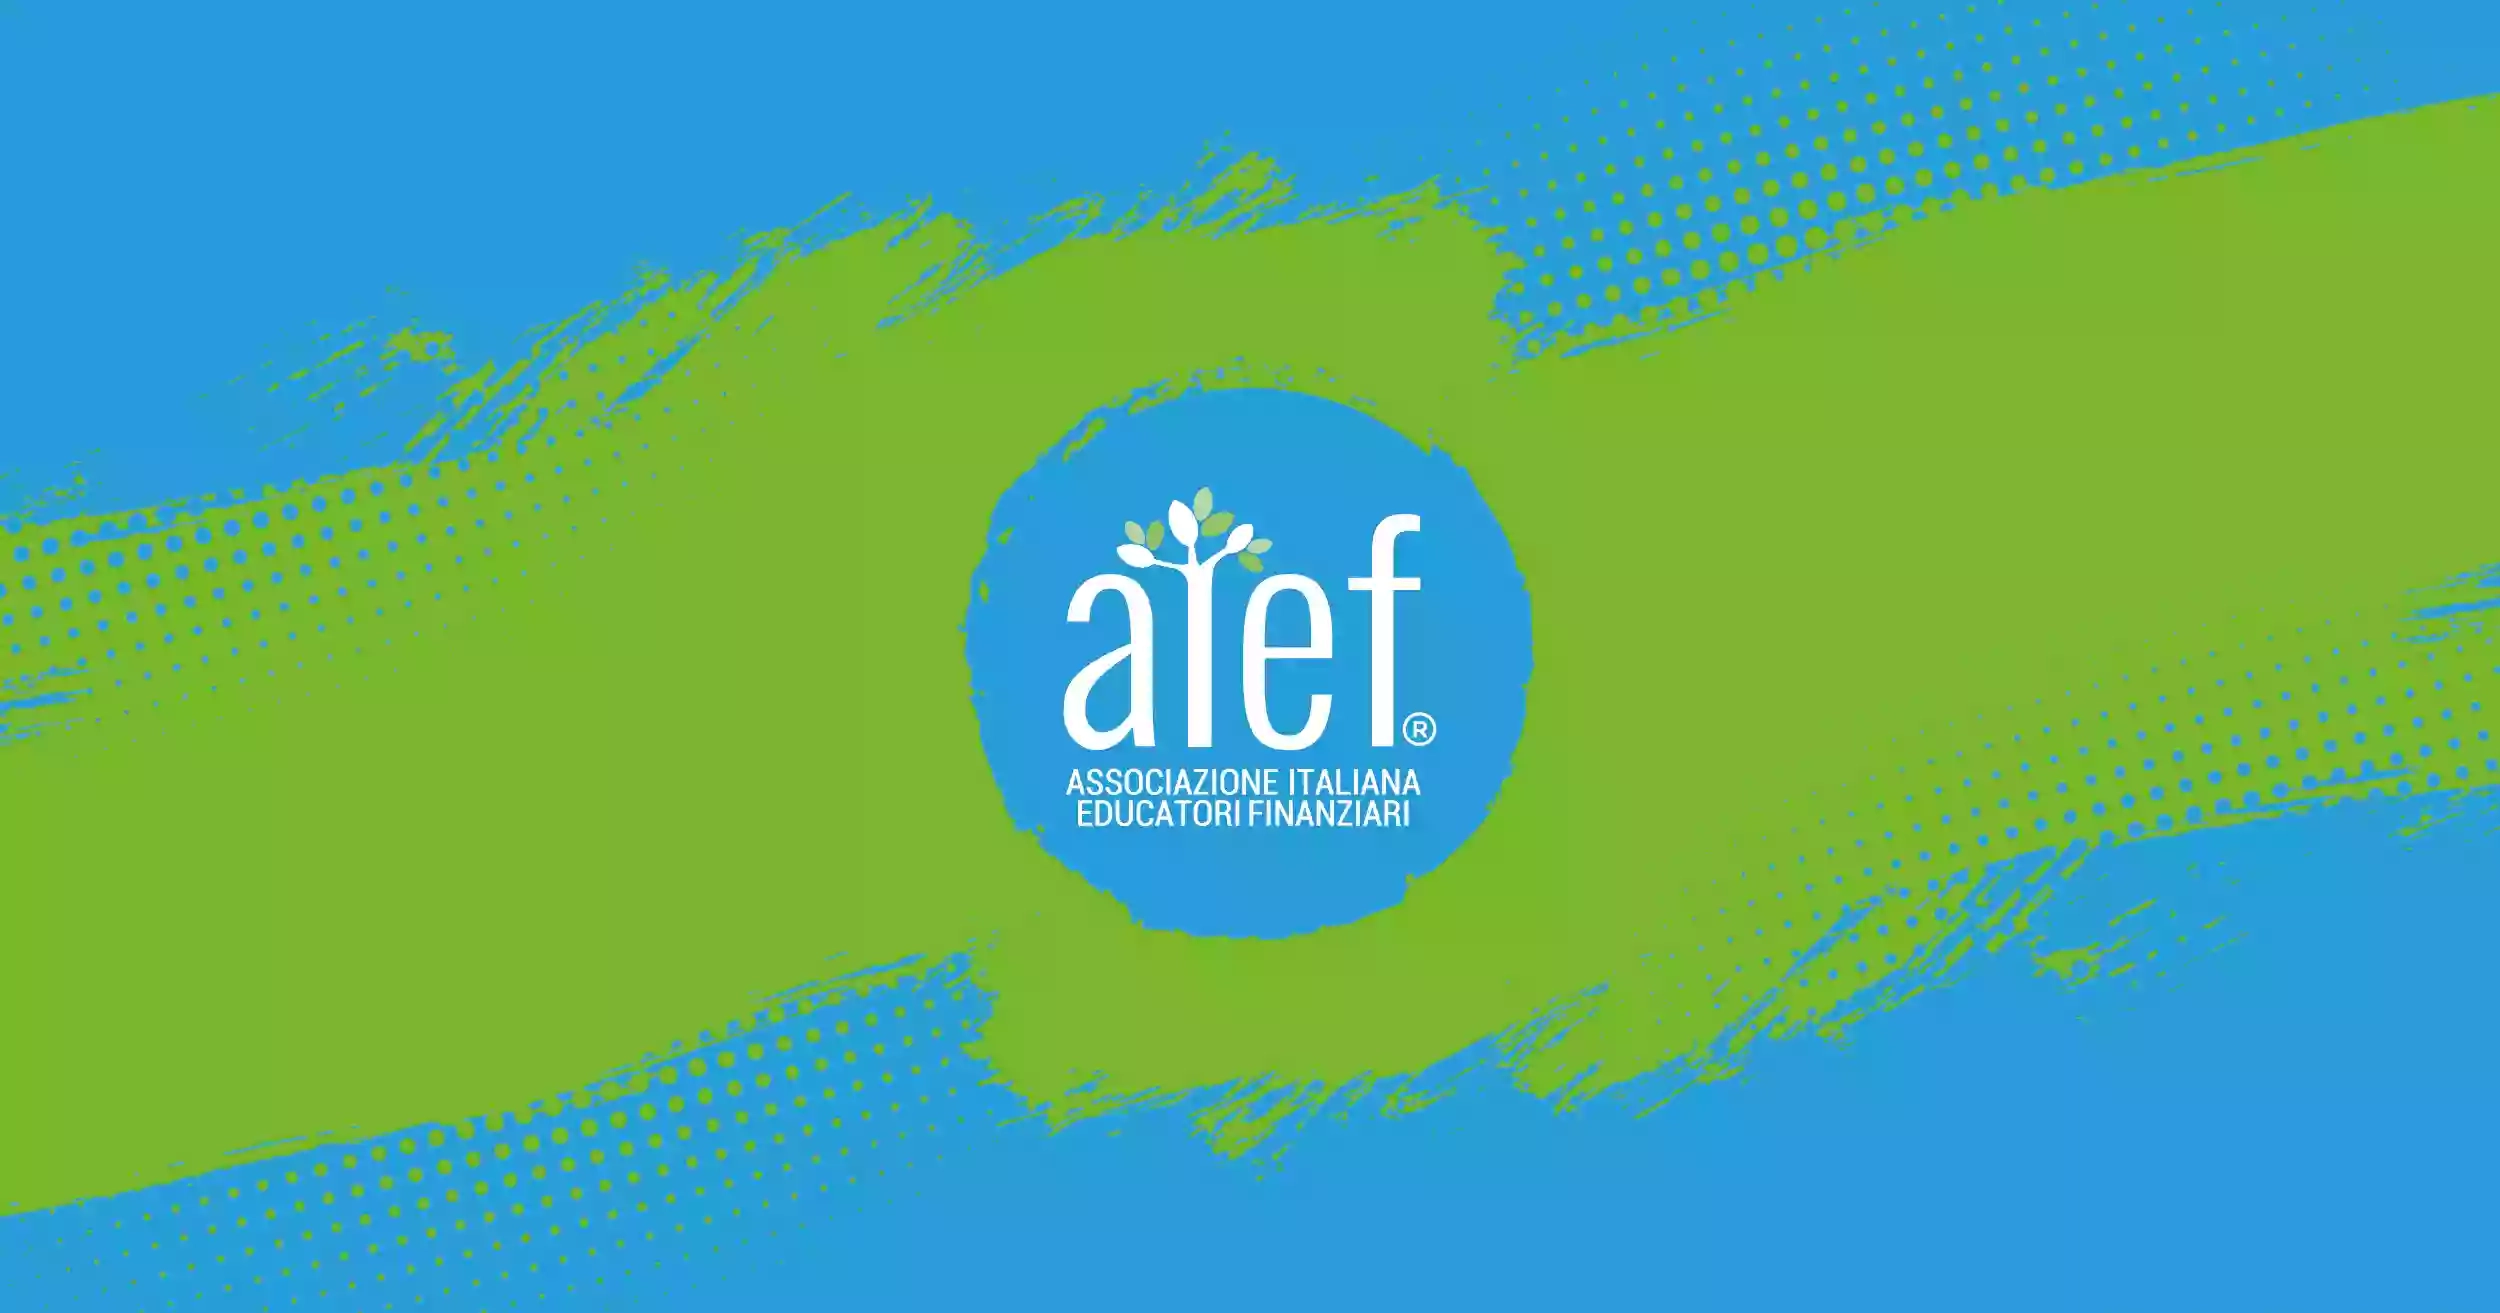 AIEF - Associazione Italiana Educatori Finanziari